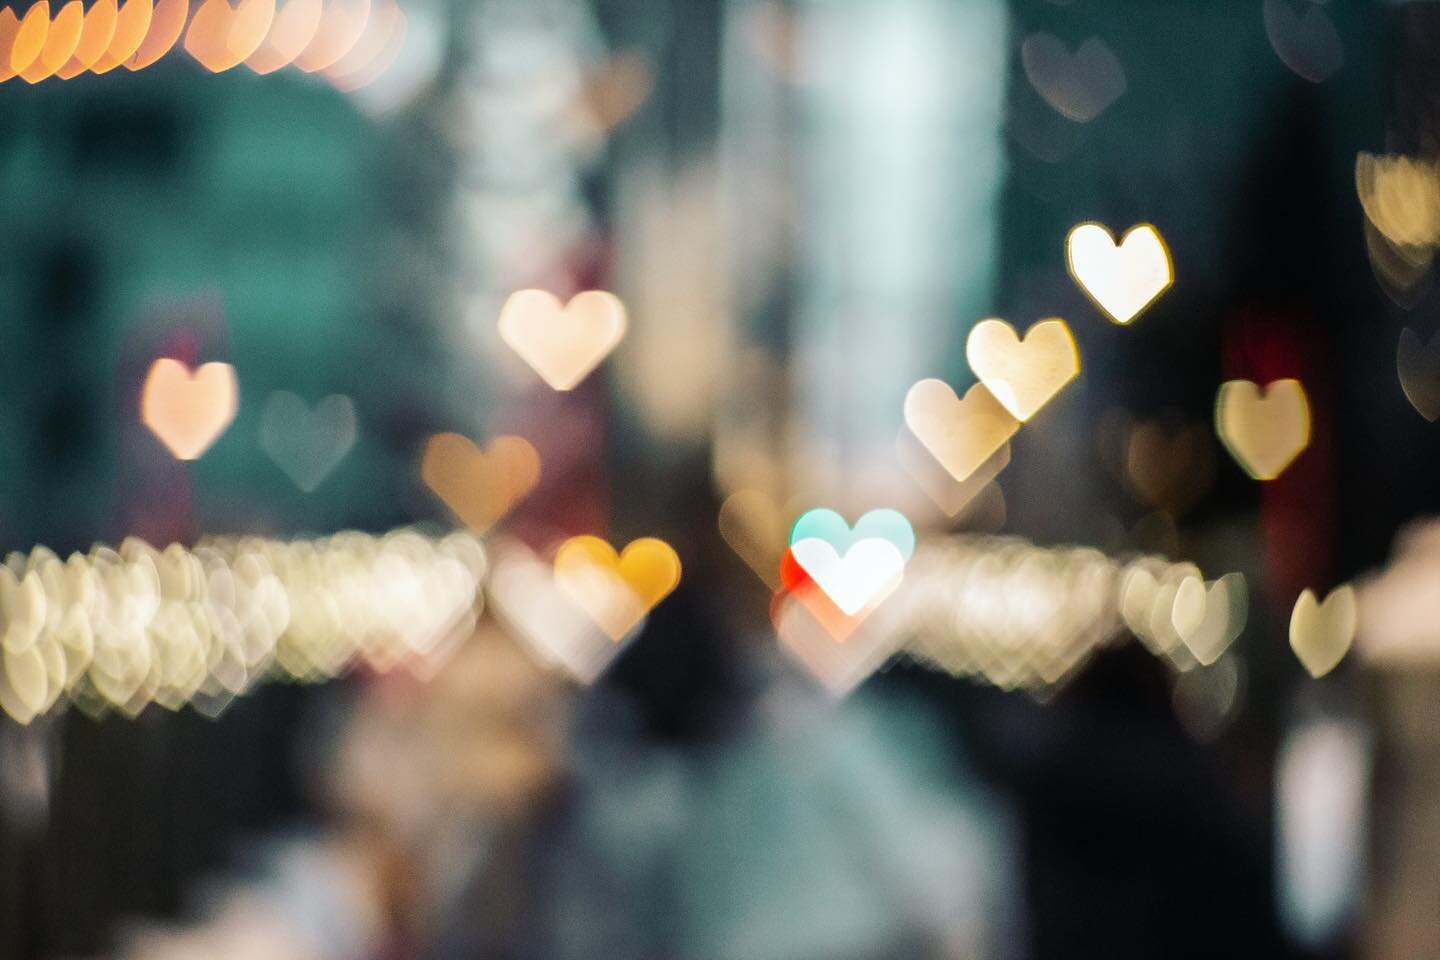 Love never dies 💚💙💛🧡❤️
.
.
.
.
.
.
.
.
.
.
#loveneverdies #missingmykitty #heartbokeh #bokeh_addicts #bokehlicious #bokehkillers #bokeh_bliss #bokeh_kings #neverenoughbokeh #igerscalgary #sharecalgary #downtowncalgary #calgarylife #calgaryphotogr